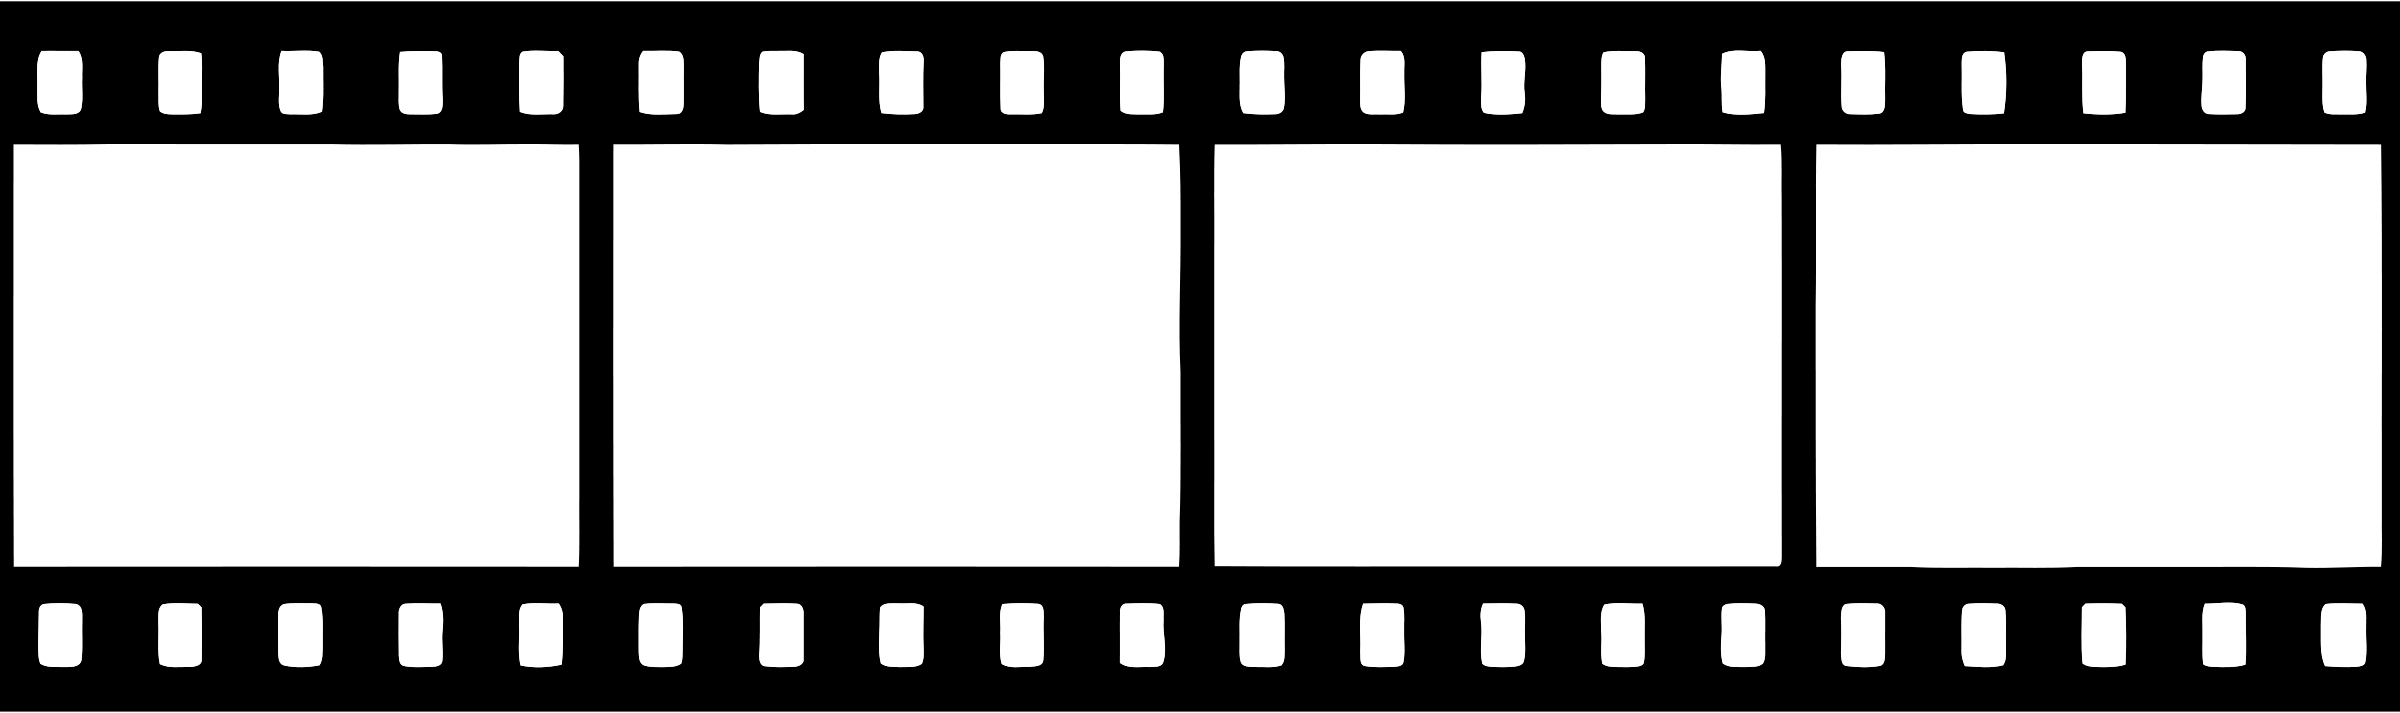 Video Film Clipart - Film Clipart